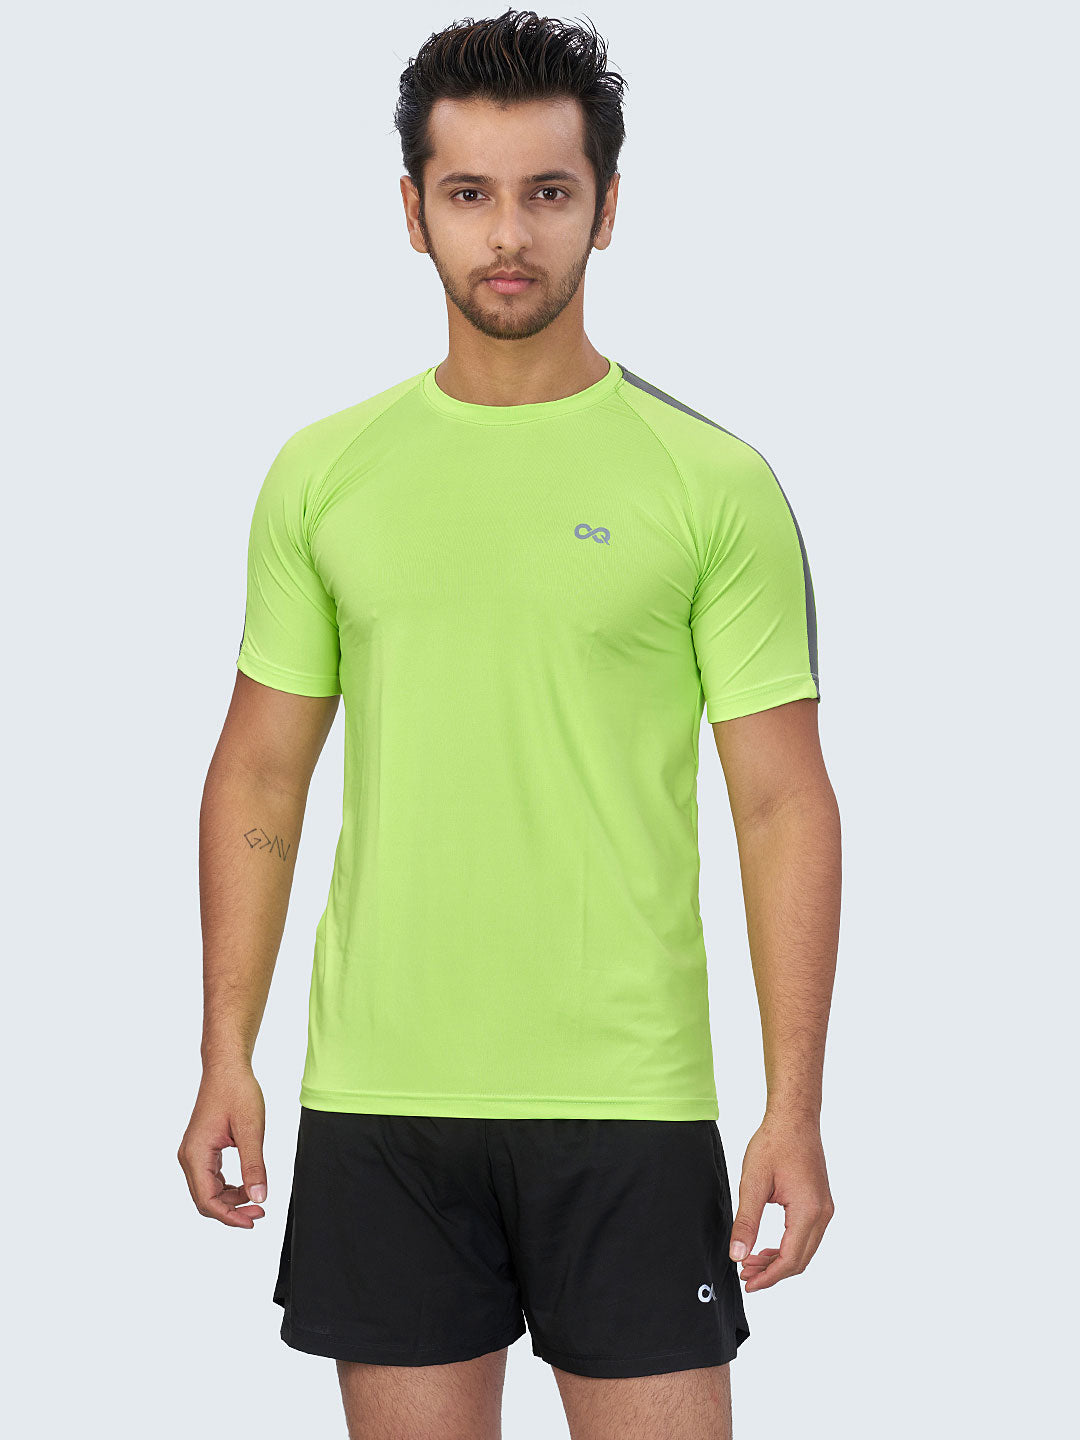 Men's Striped Active Sports T-Shirt: Neon Green